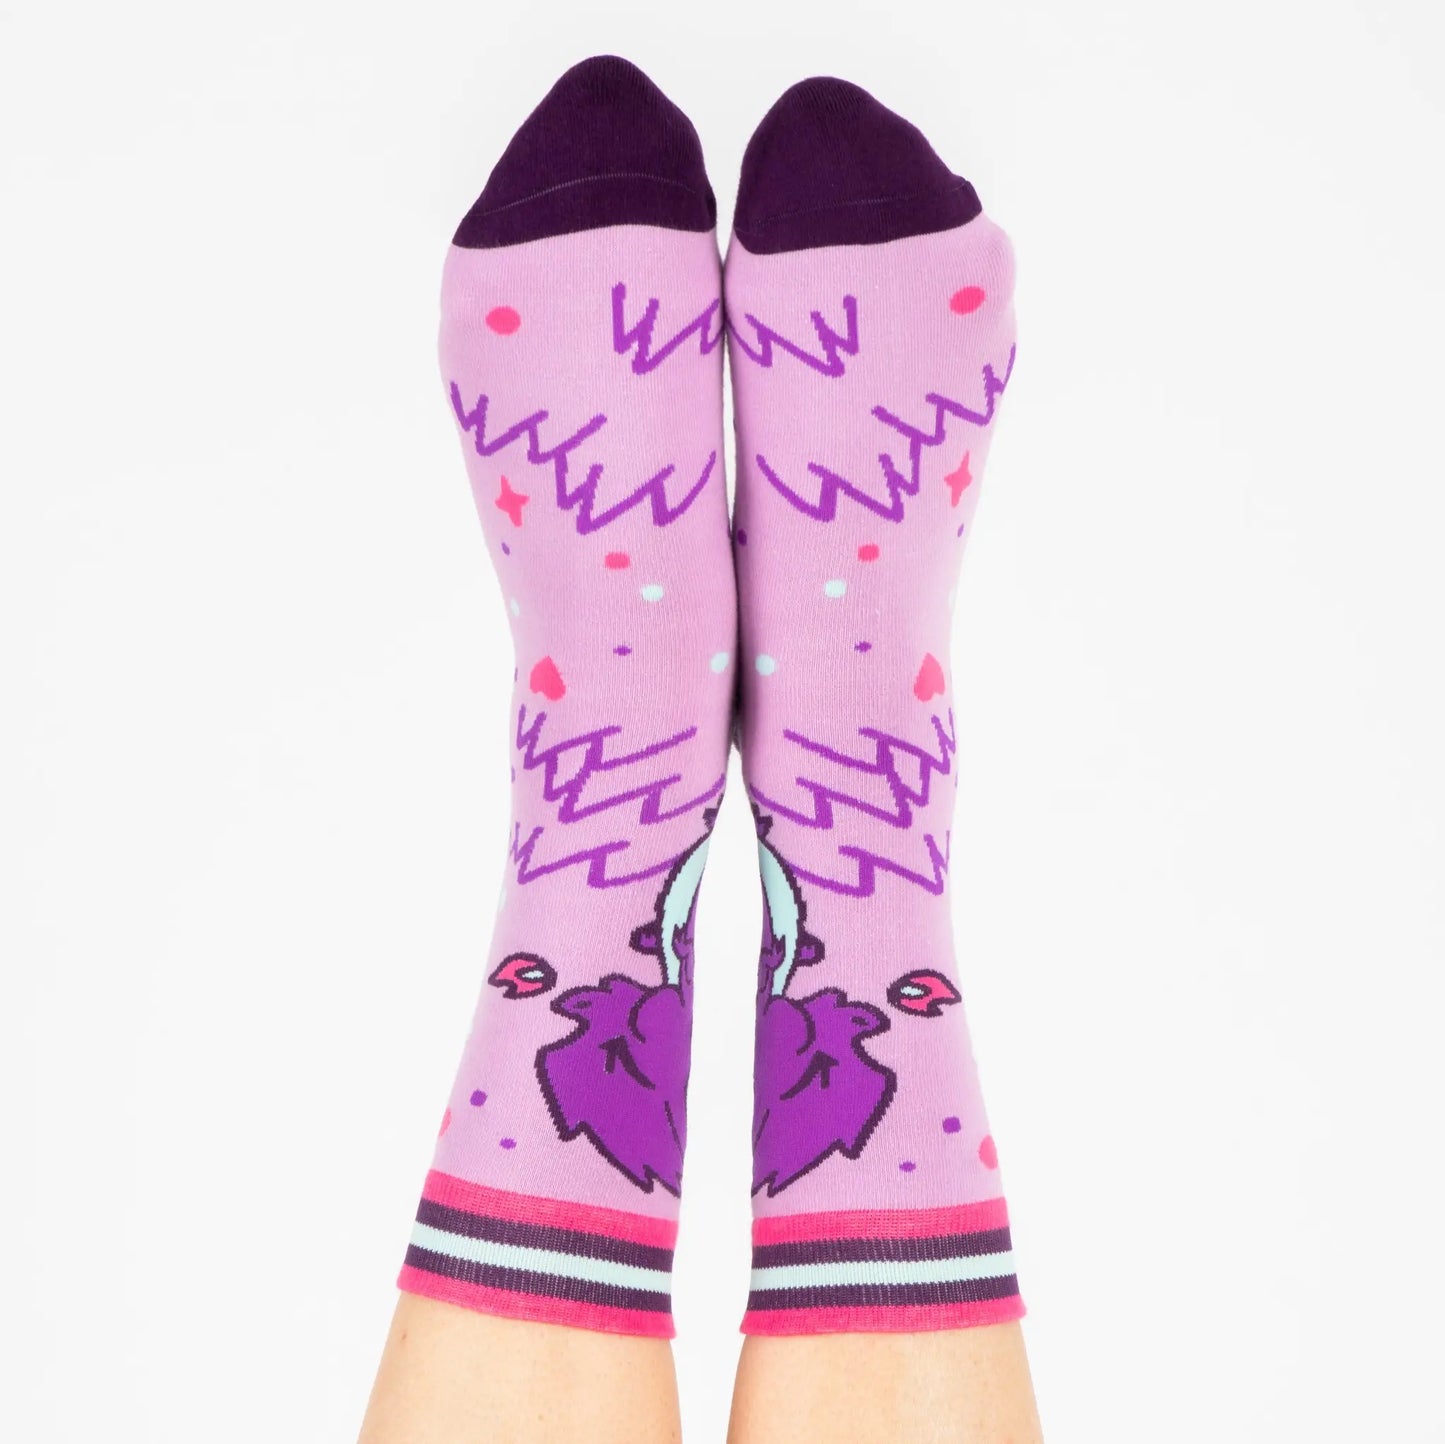 Cute Dragon Socks